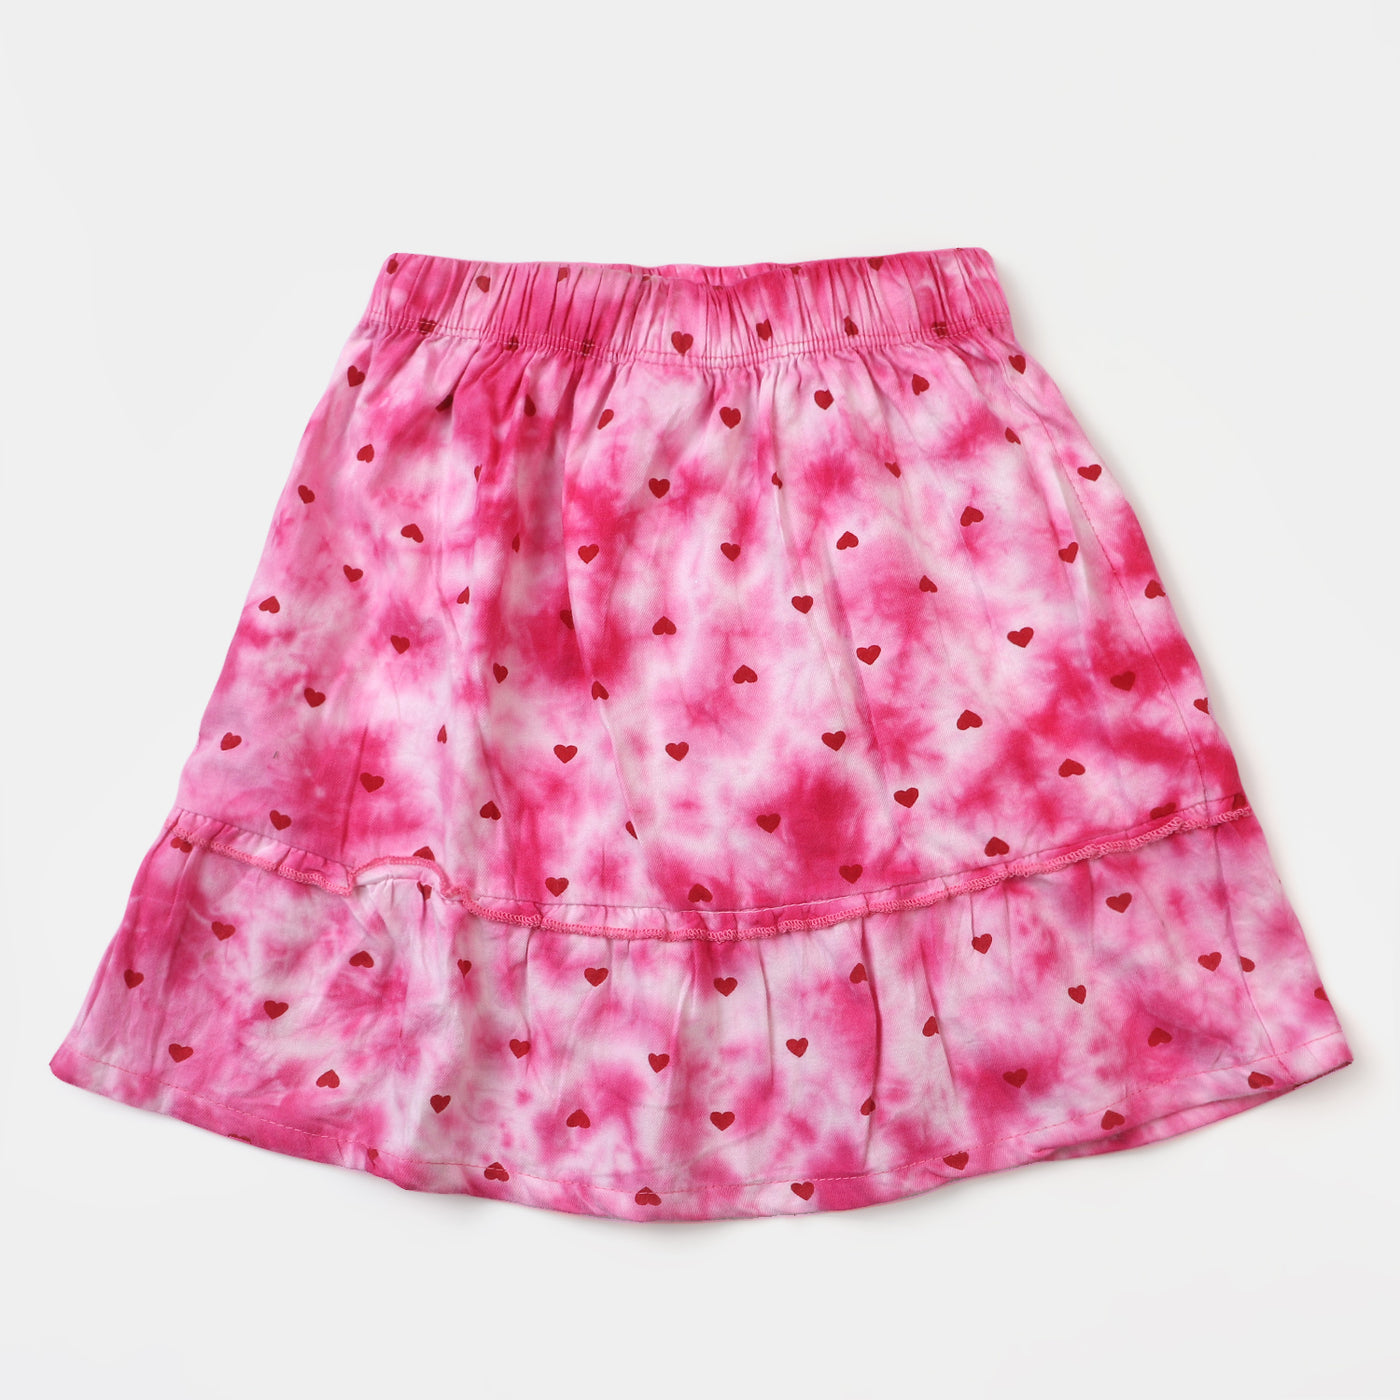 Girls Cotton Casual Skirt Tie Dye Hearts - Magenta